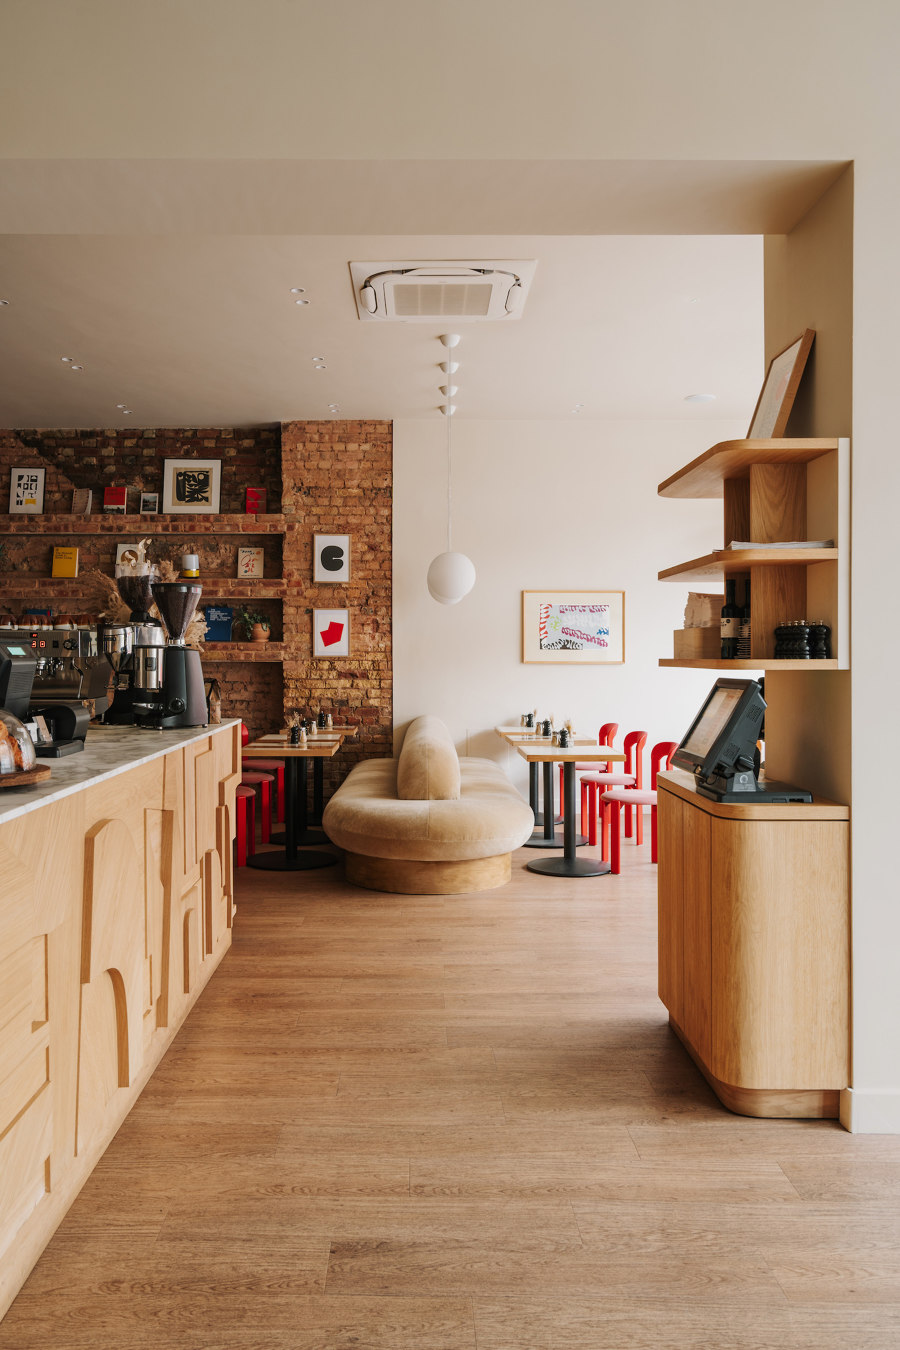 Beam Cafe von Ola Jachymiak Studio | Café-Interieurs